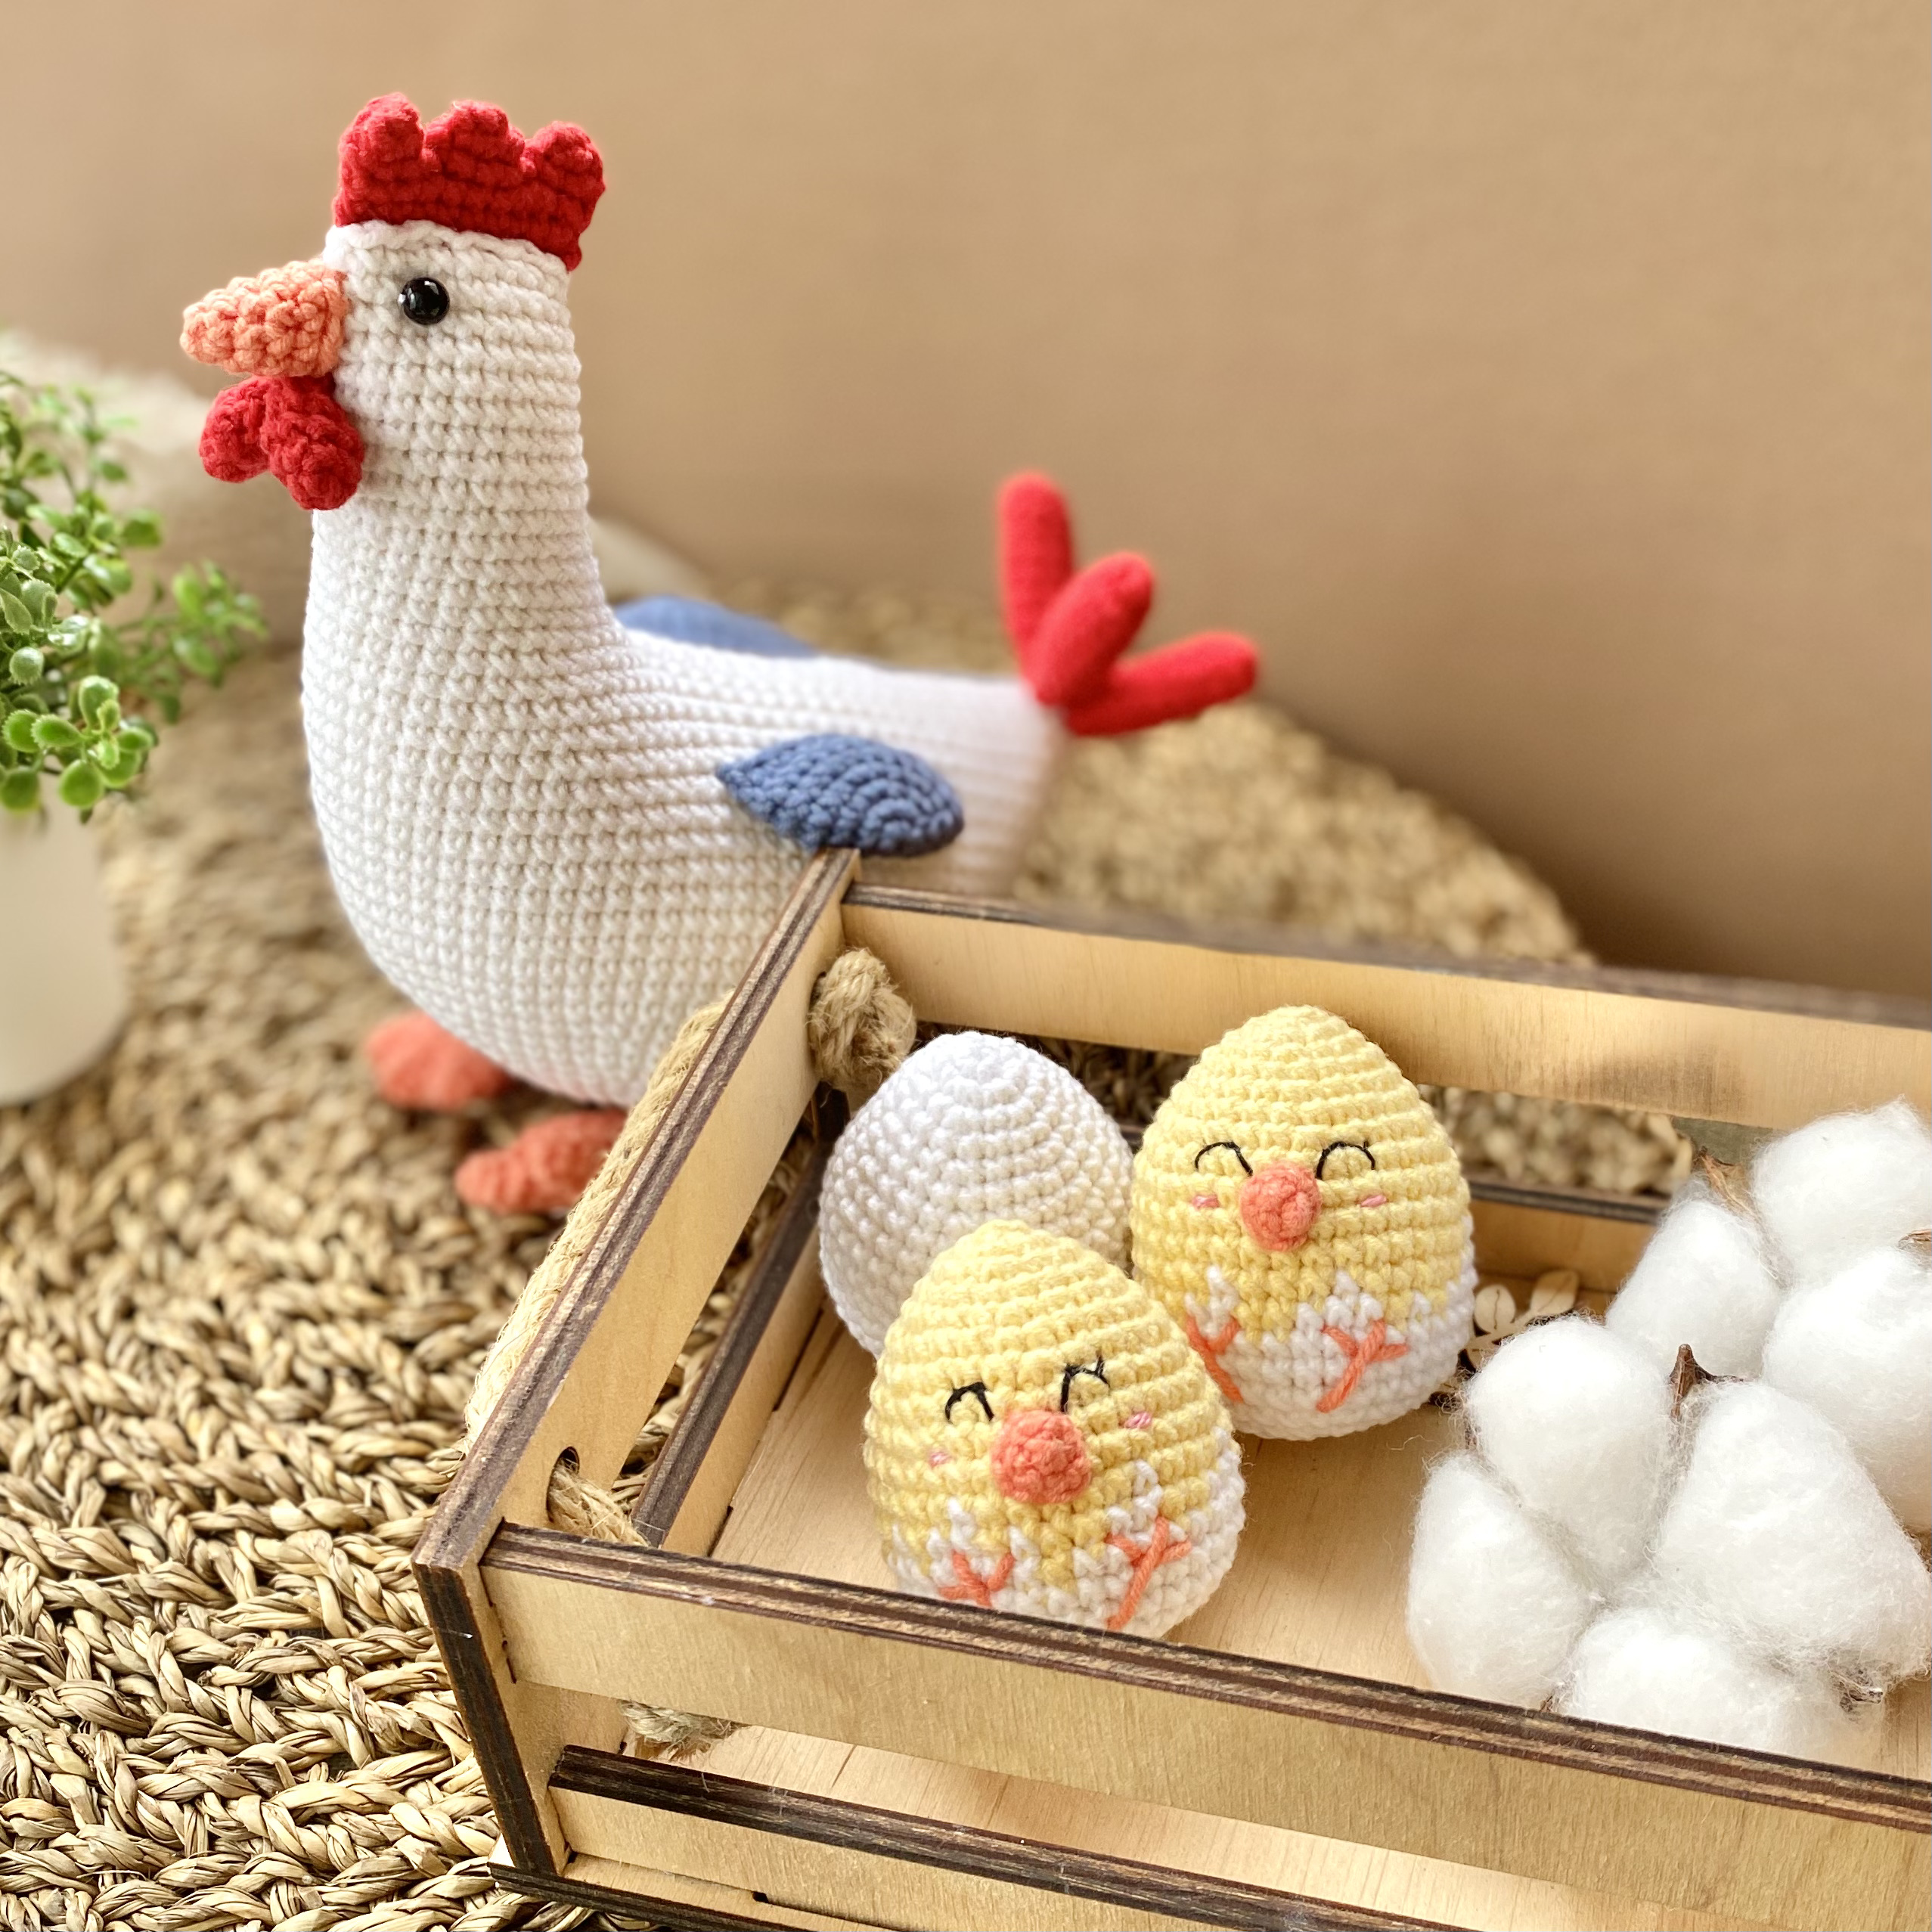 Chicken/Hen Egg BasketEgg Basket Crochet pattern by Dinashka Dolls